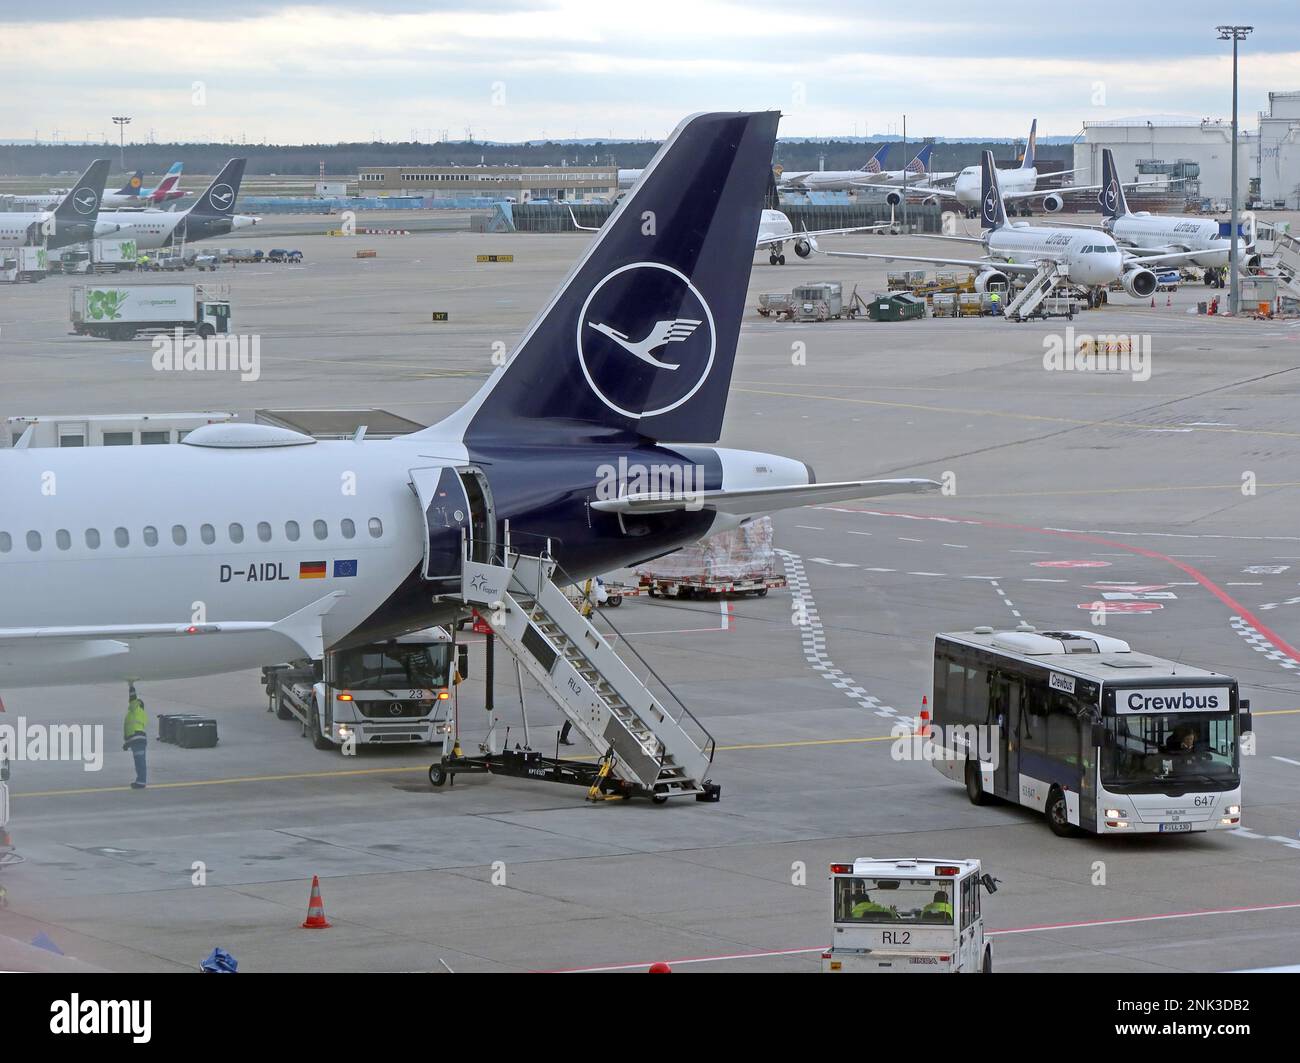 AIRBUS A321 - MSN 4881 - D-AIDL - Lufthansa aircraft at Frankfurt airport , Hesse, Germany Stock Photo